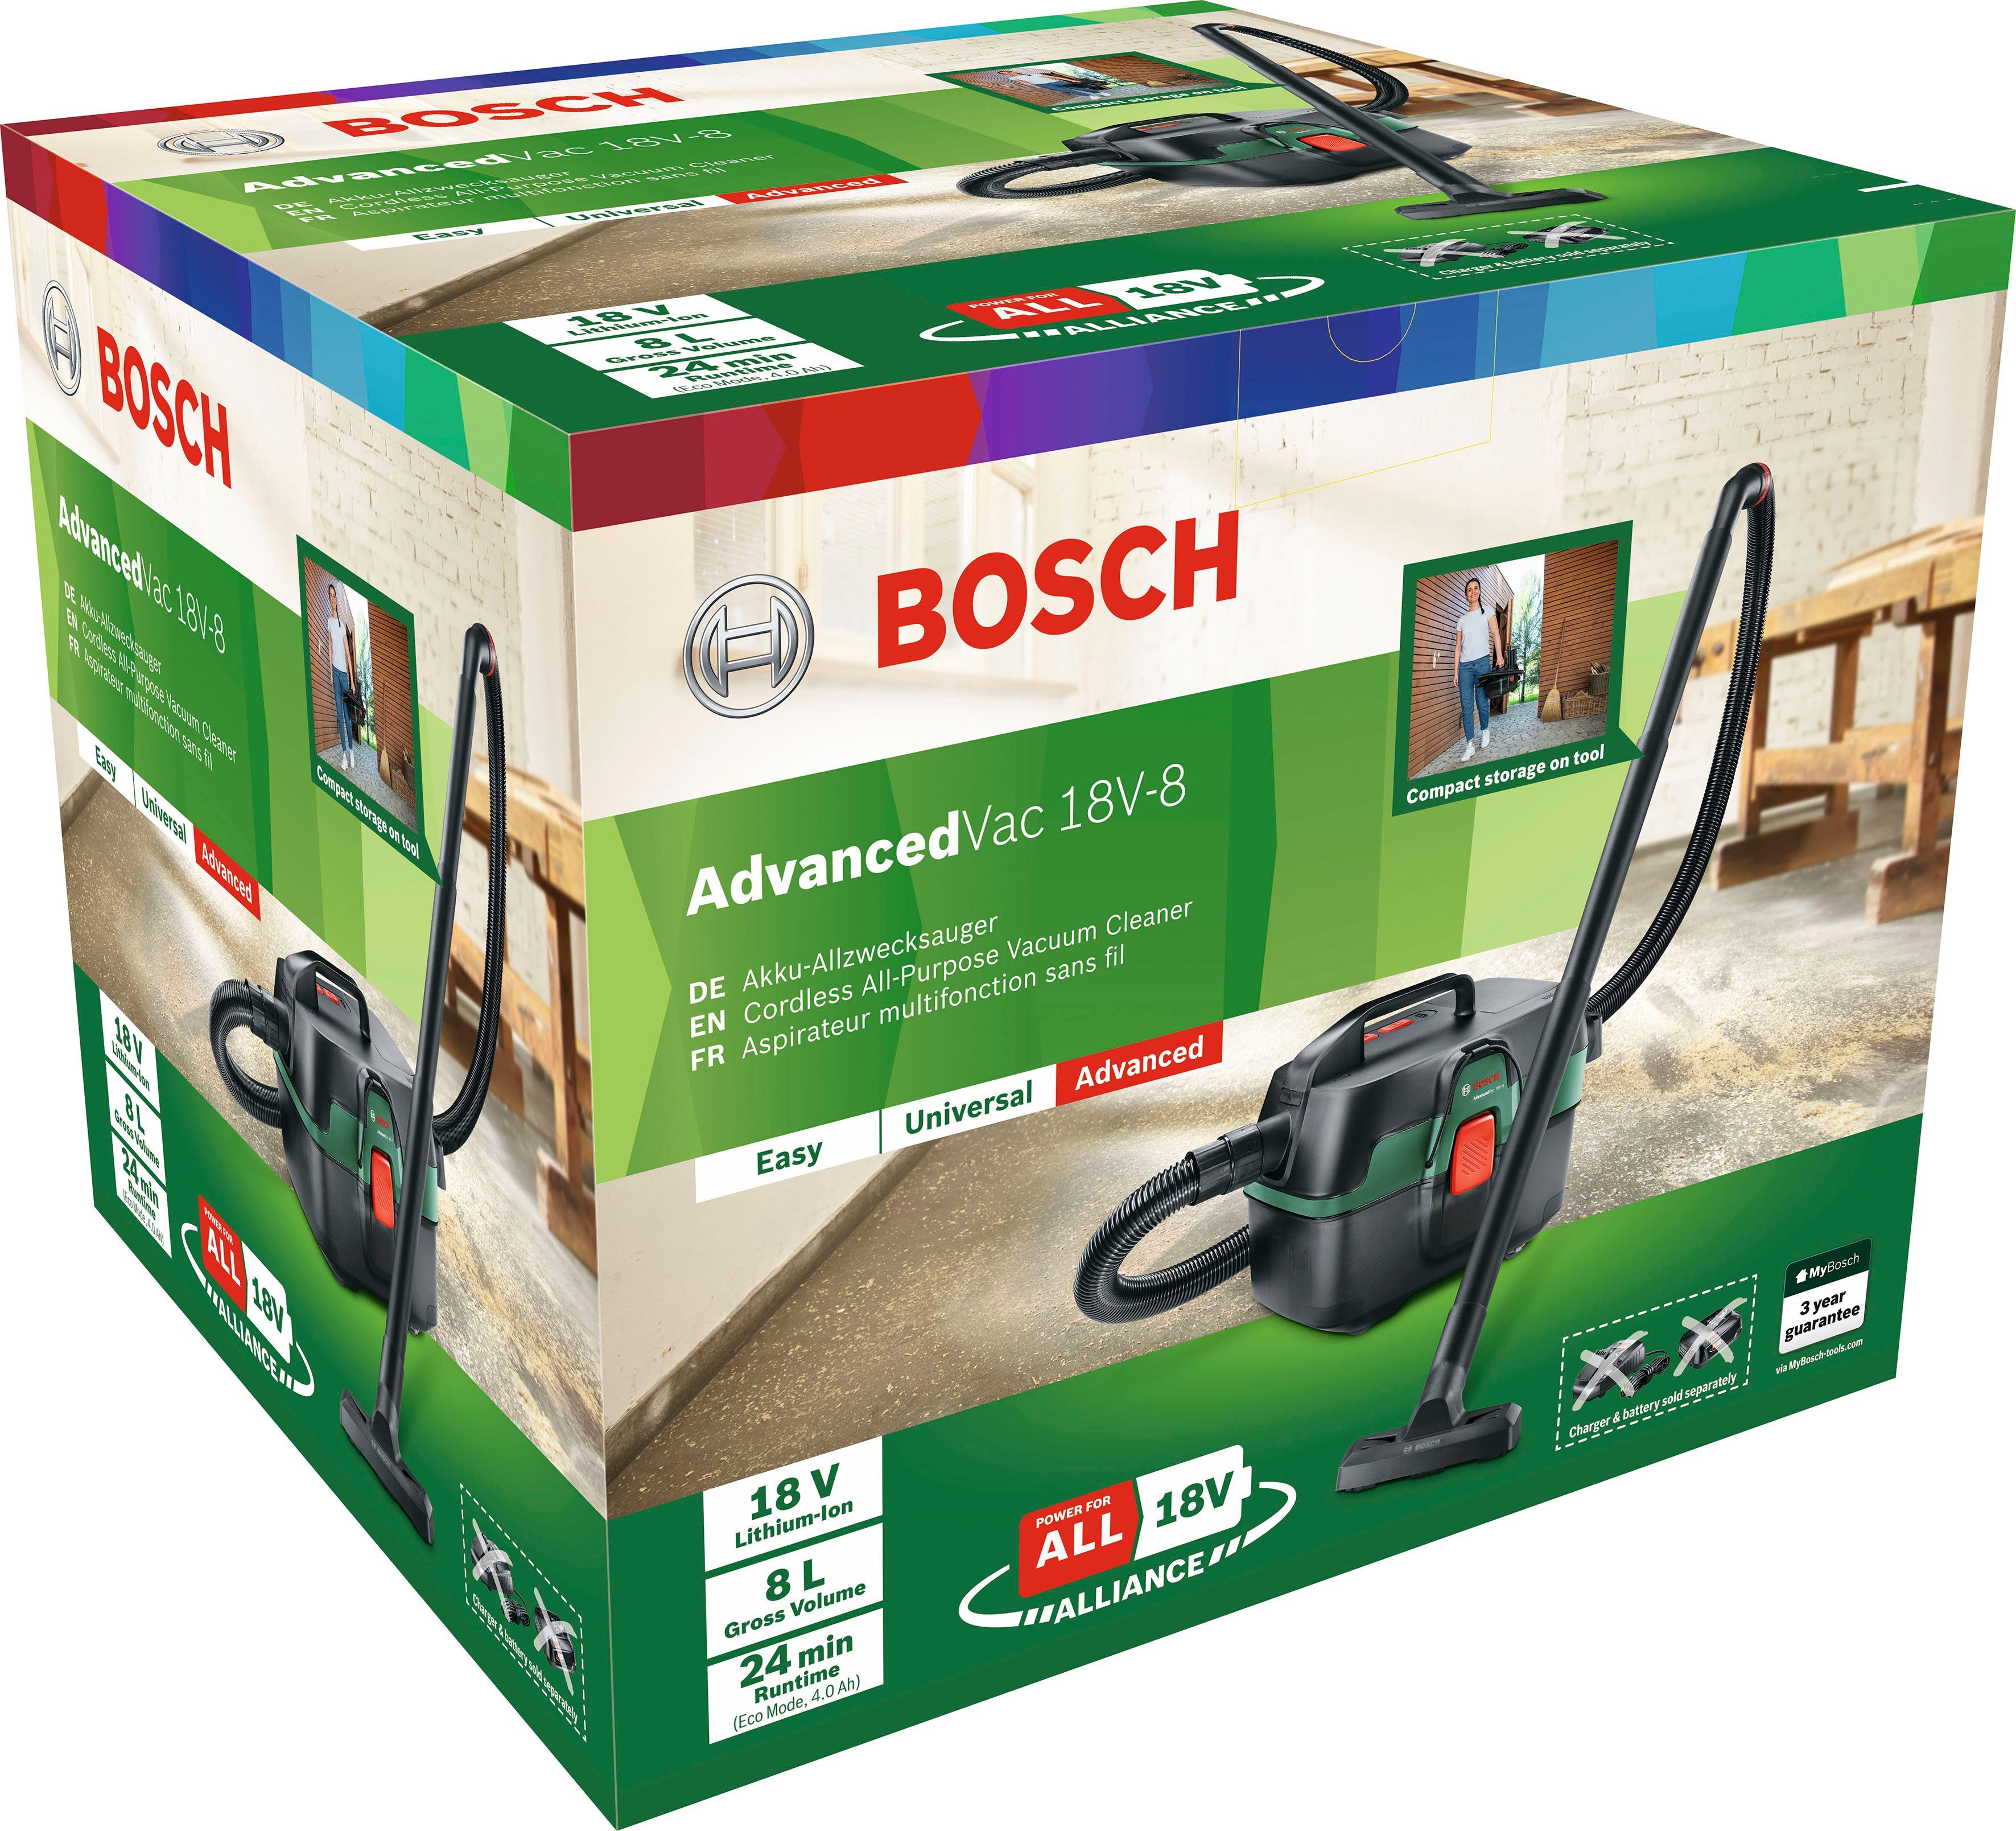 Bosch Home & Garden 18V-8, Akku Ladegerät AdvancedVac ohne Beutel, Nass-Trocken-Akkusauger und mit